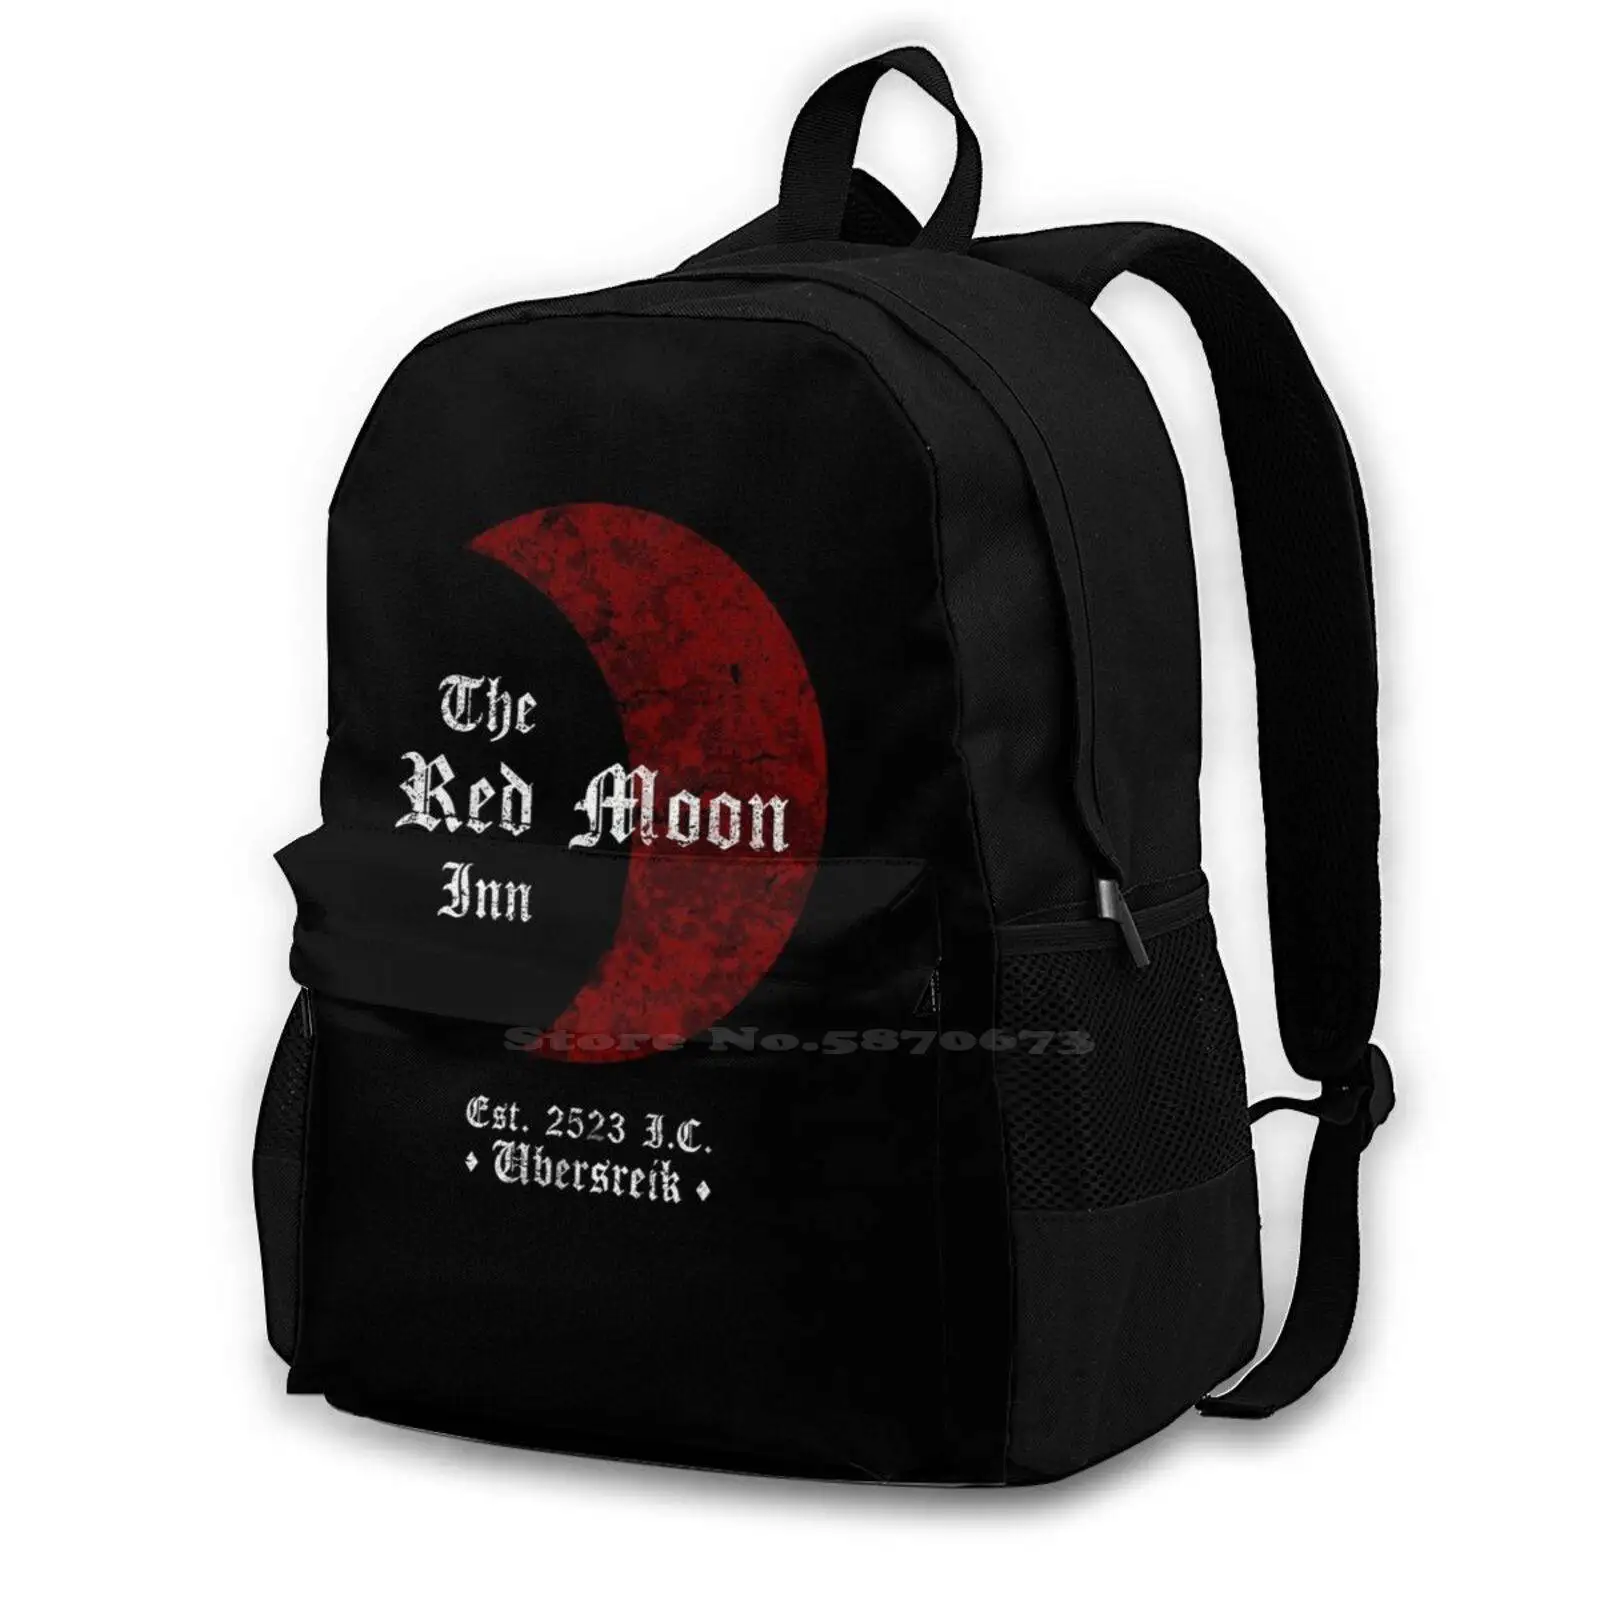 

Red Moon Inn Teen College Student Backpack Laptop Travel Bags Red Moon Inn Vermintide The End Times Skaven Gamer Geek Nerd